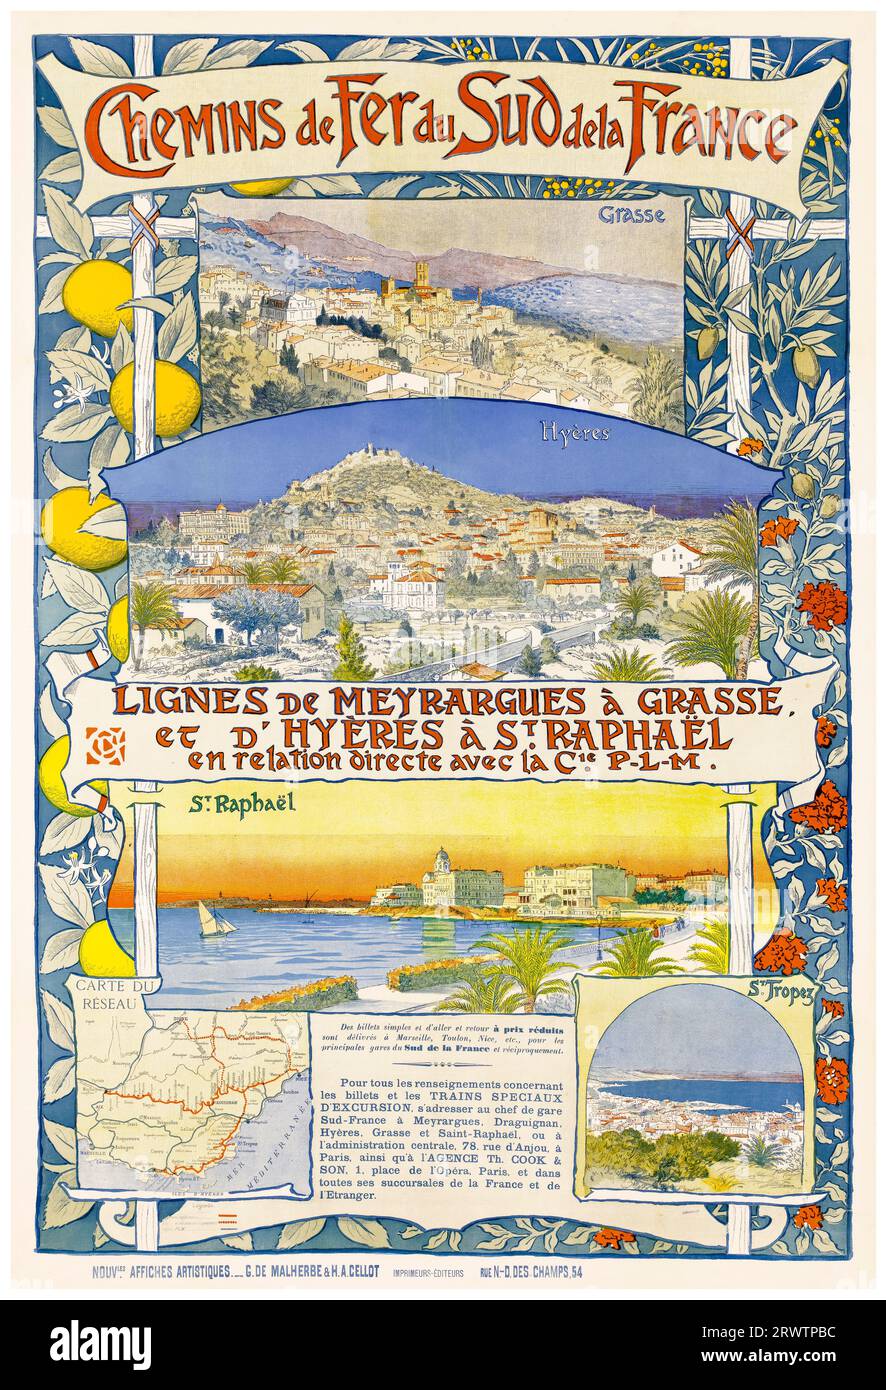 Chemins de fer du Sud de la France (Railways of the South of France), French vintage travel poster, 1891 Stock Photo